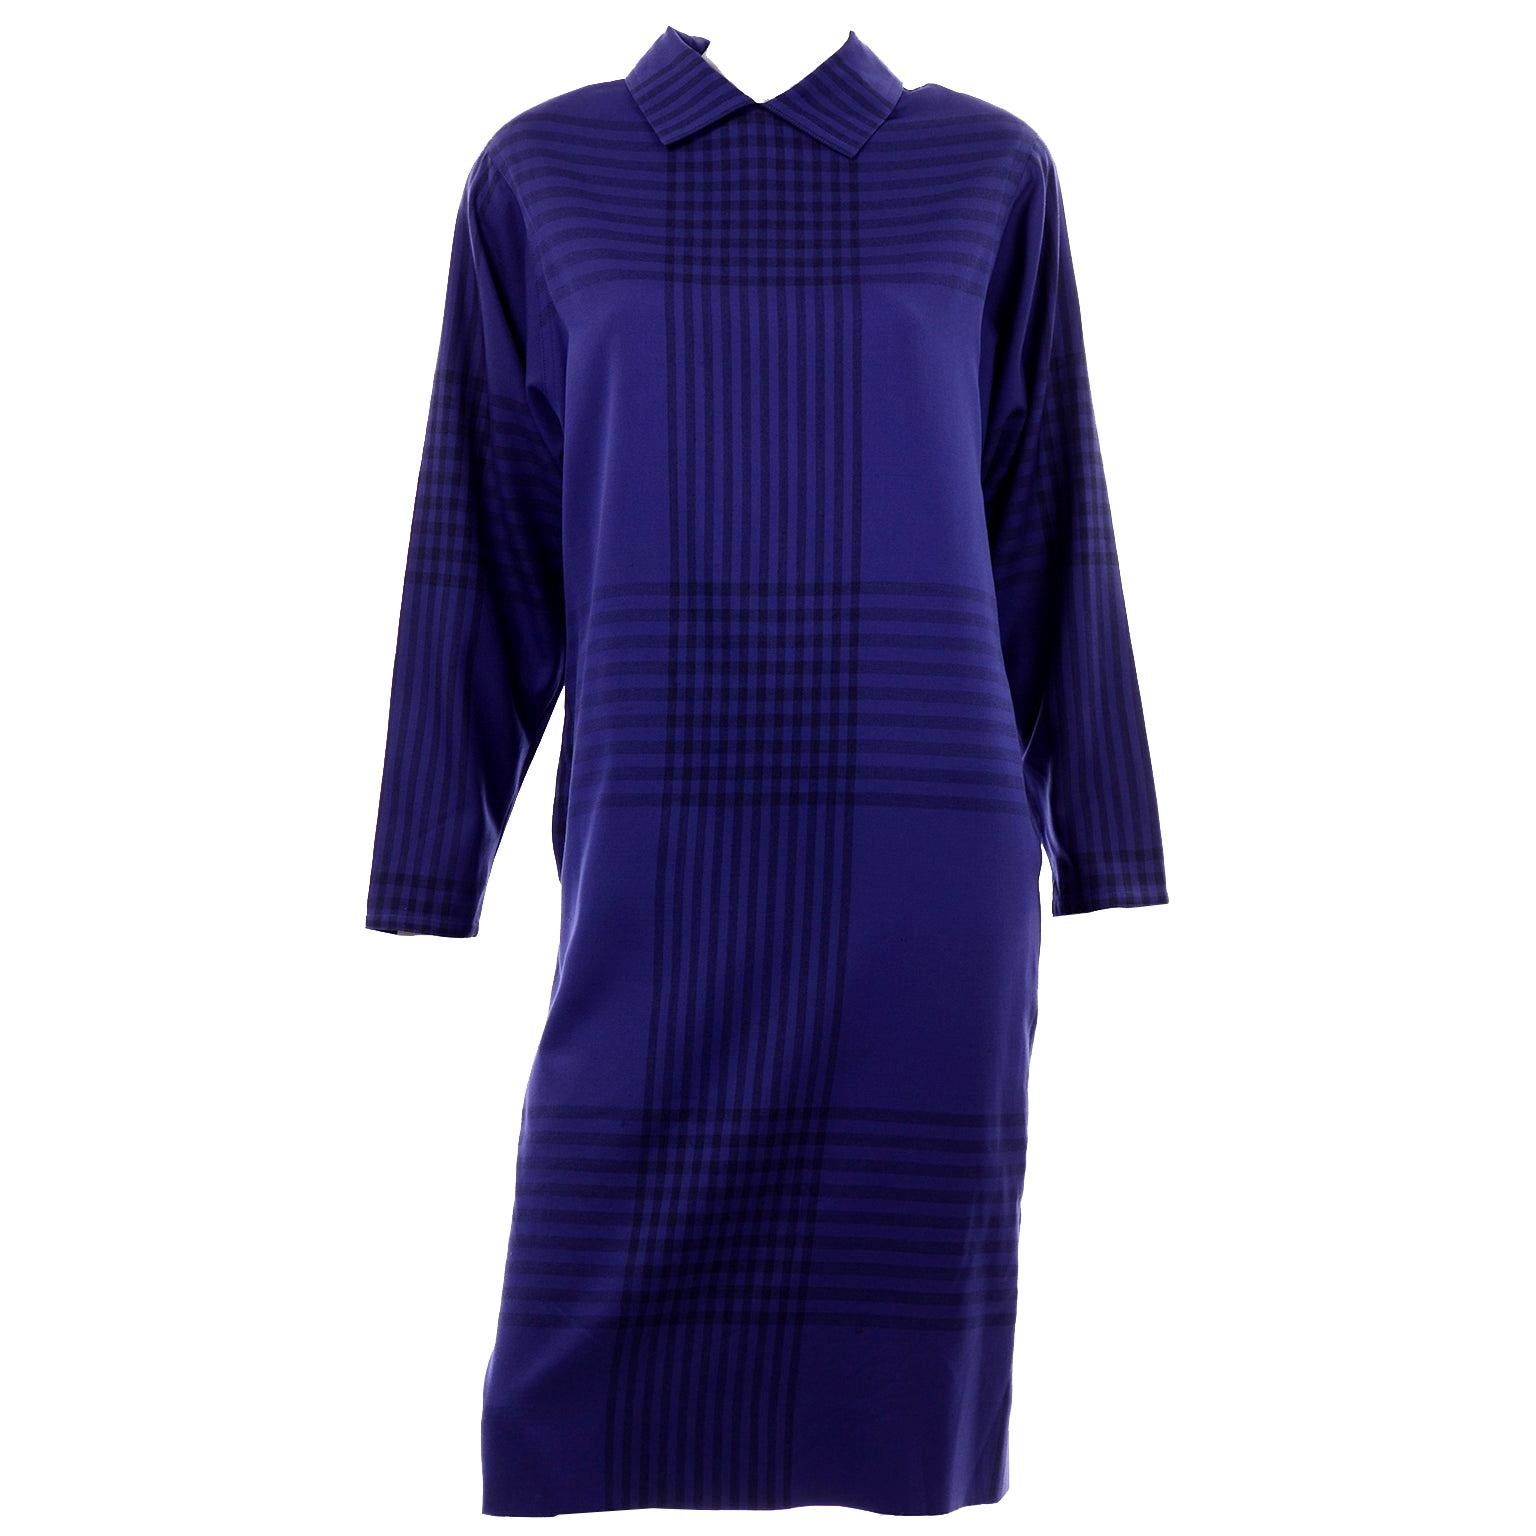 Adele Simpson Vintage Blue and Black Plaid Wool Day Dress